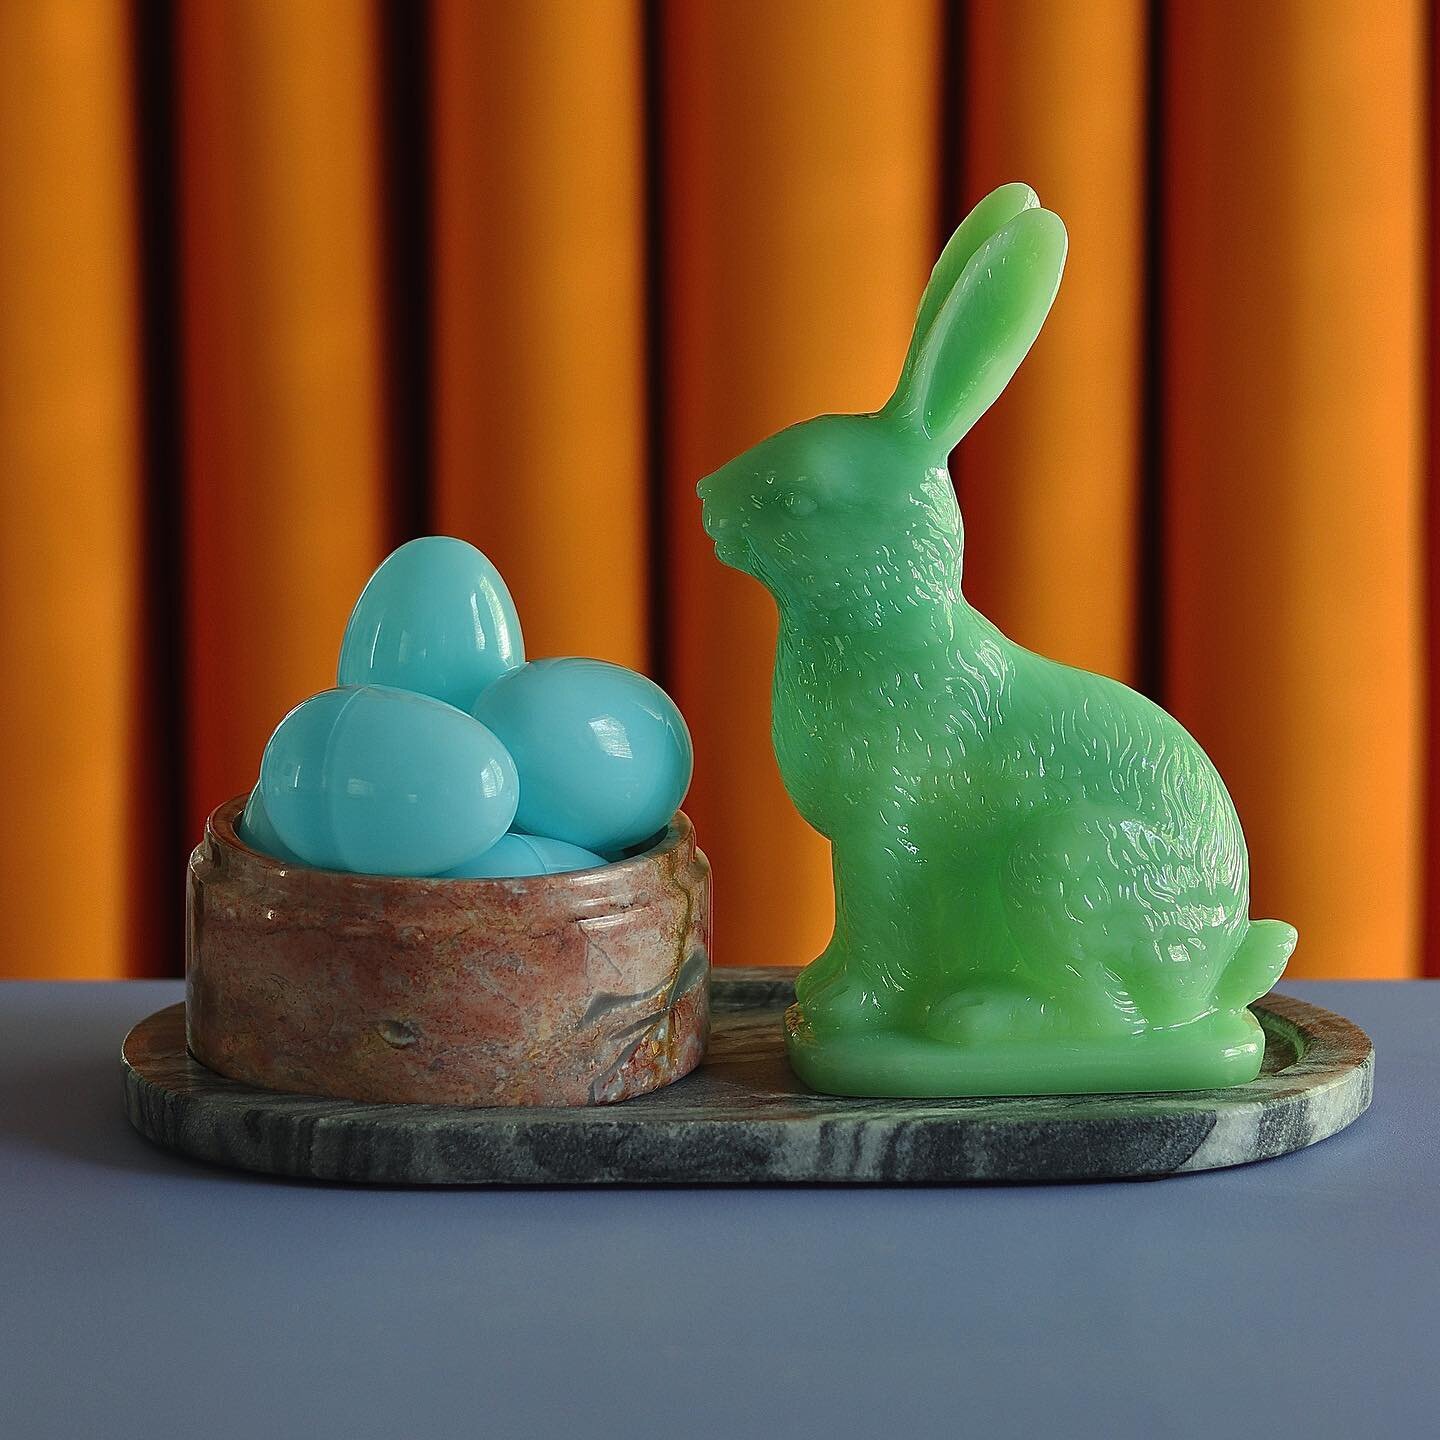 Happy Easter! 🥚🐇 
.
.
.
.
#happyeaster #easter #easterbunny #easterdecor #eastereggs #vintage #milkglass #bunny #marble